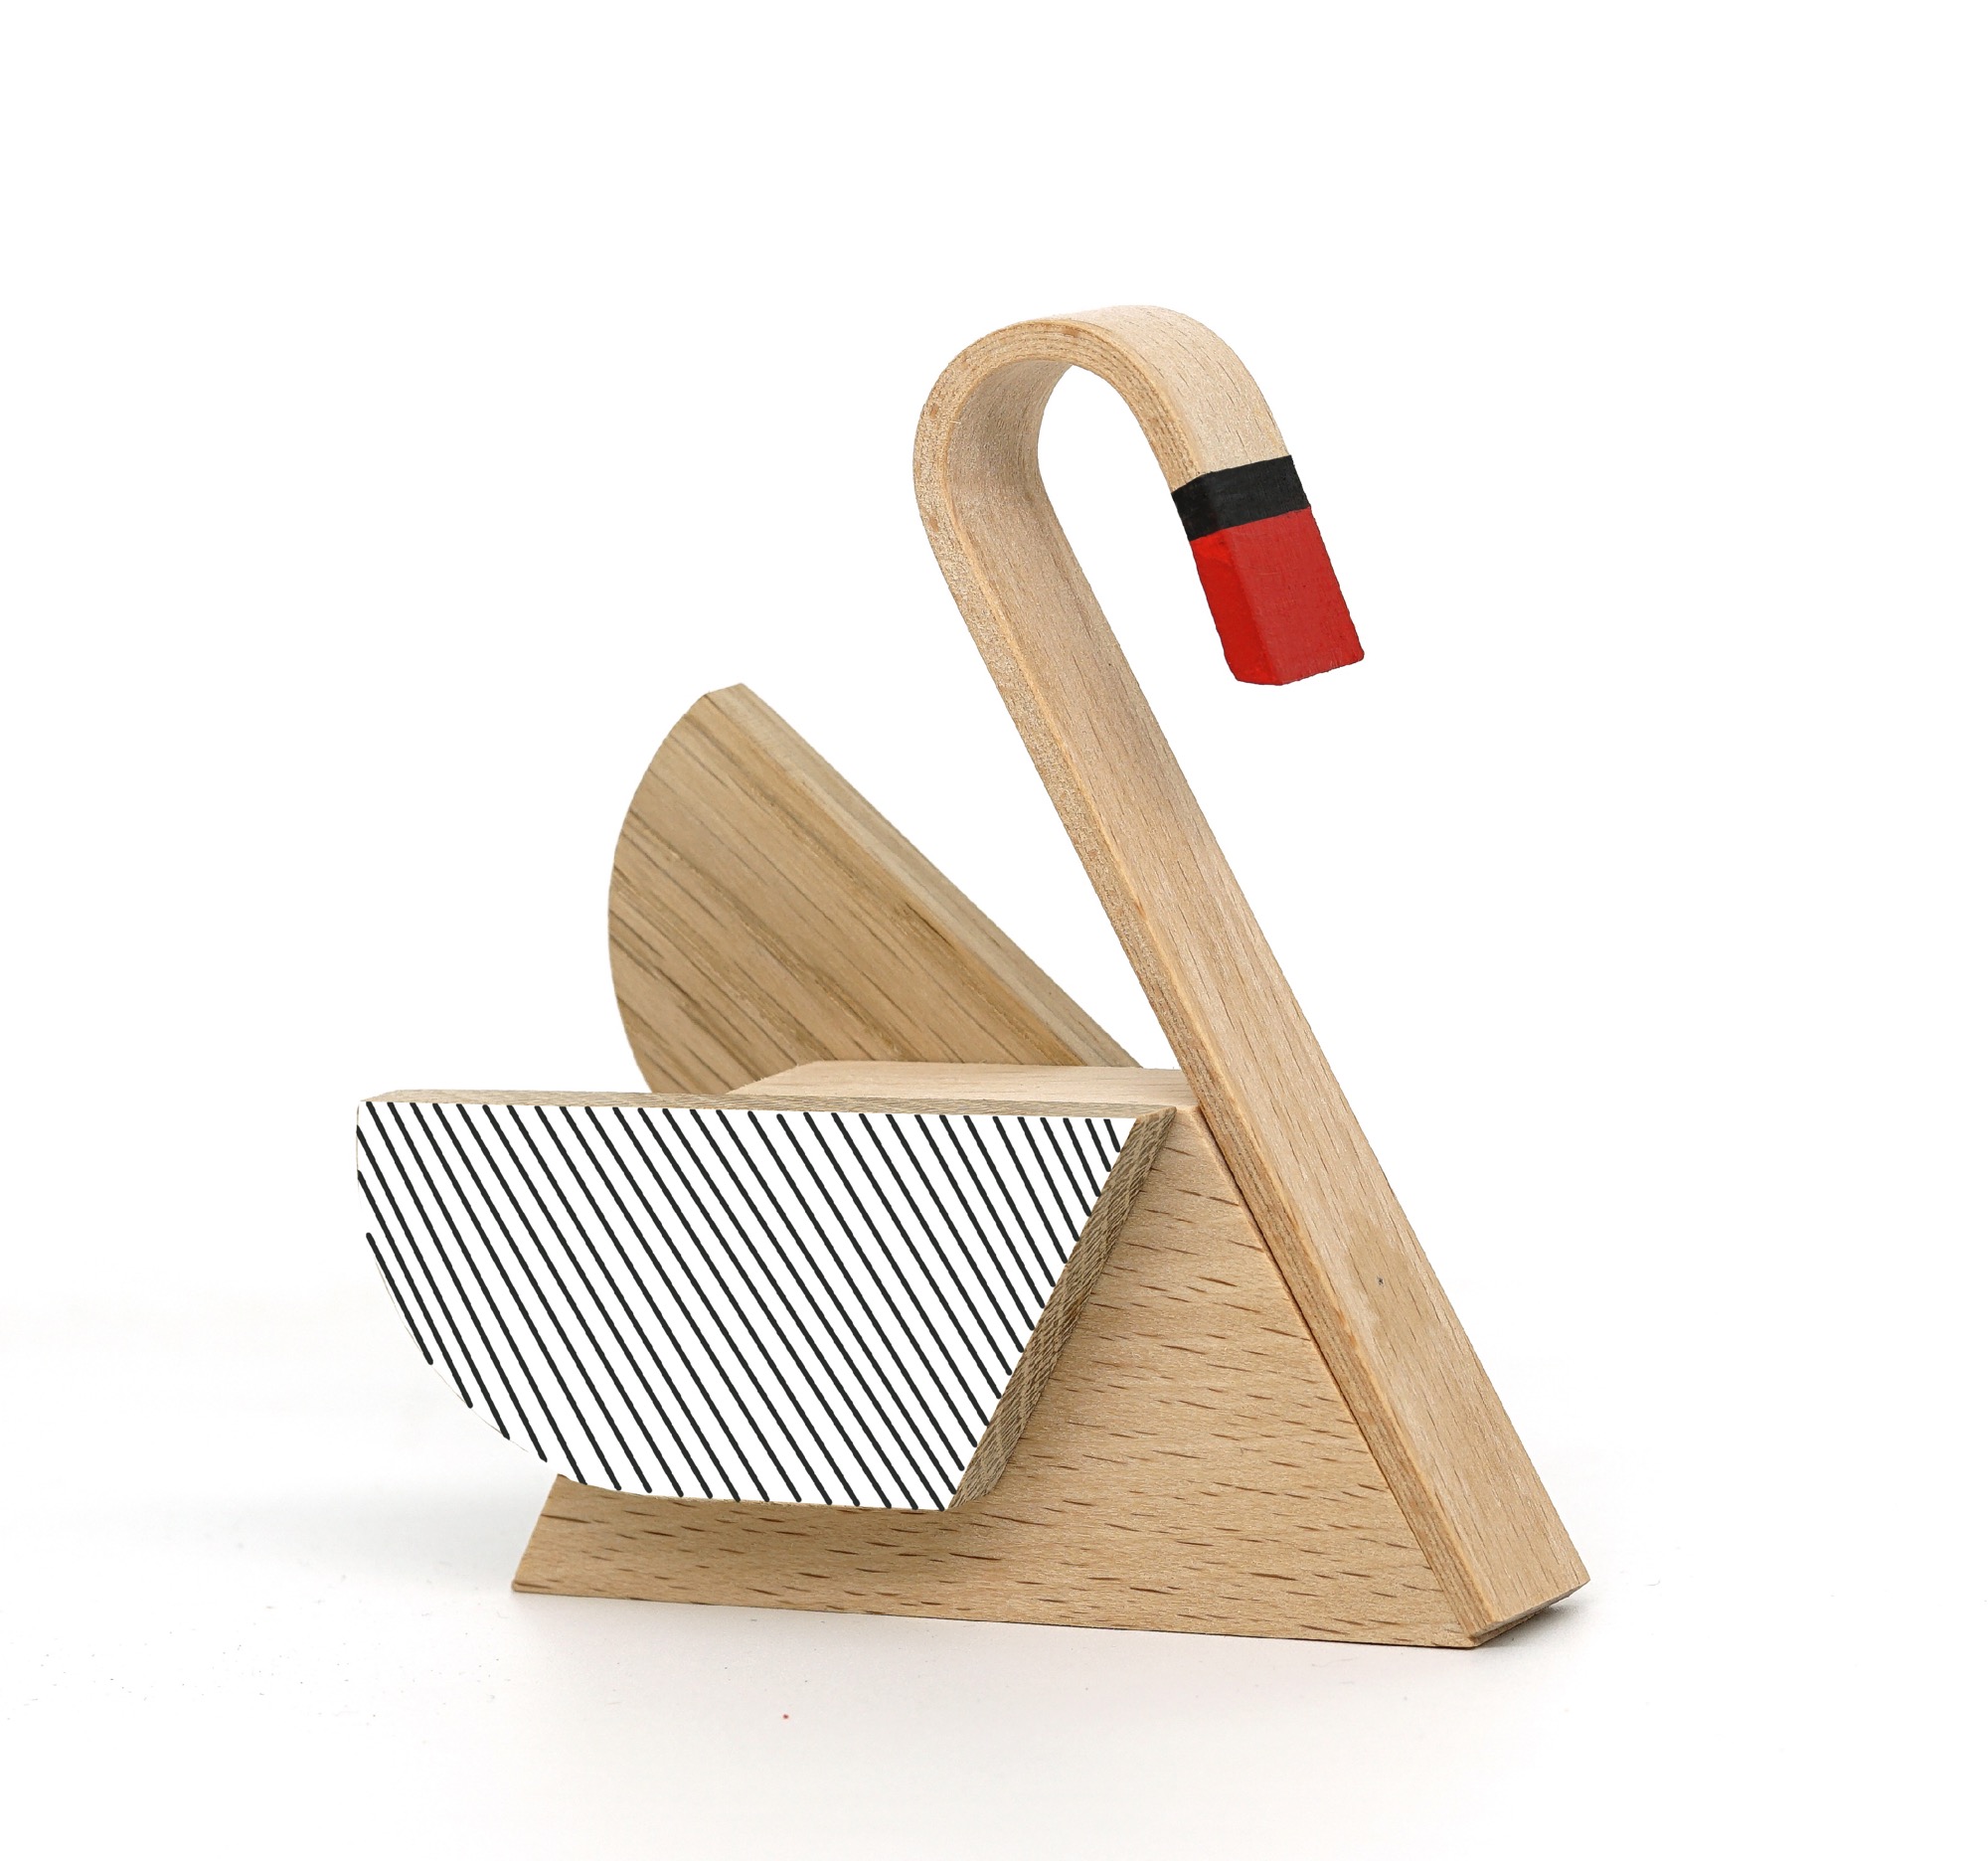 a geometric wooden toy shaped like a modular swan